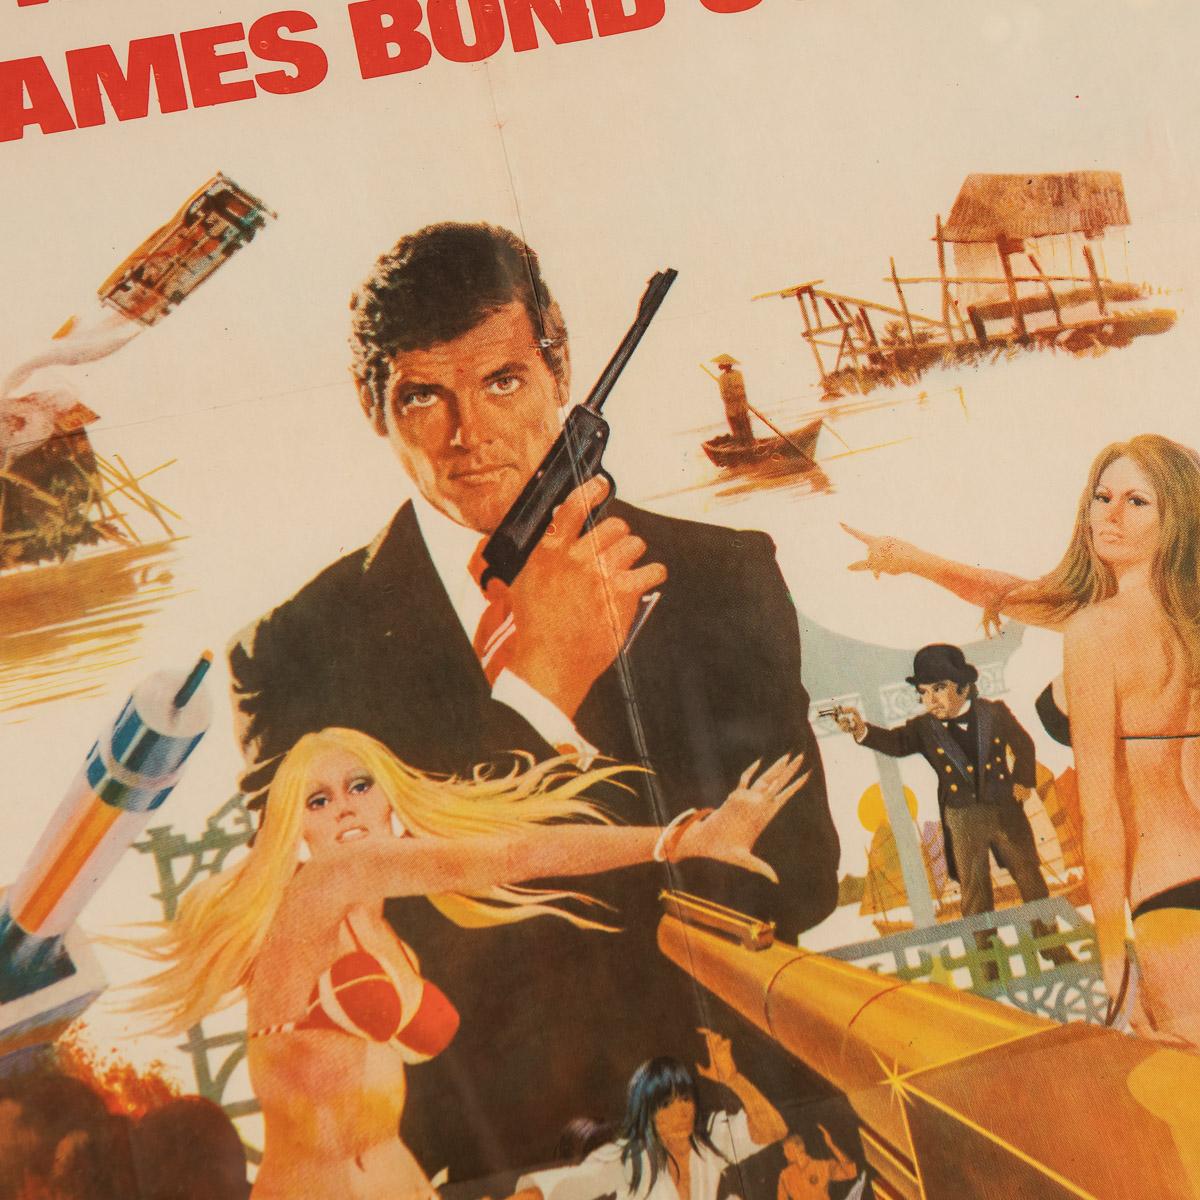 Argentine Original Argentinian Release James Bond 'Man with The Golden Gun' Poster, c.1974